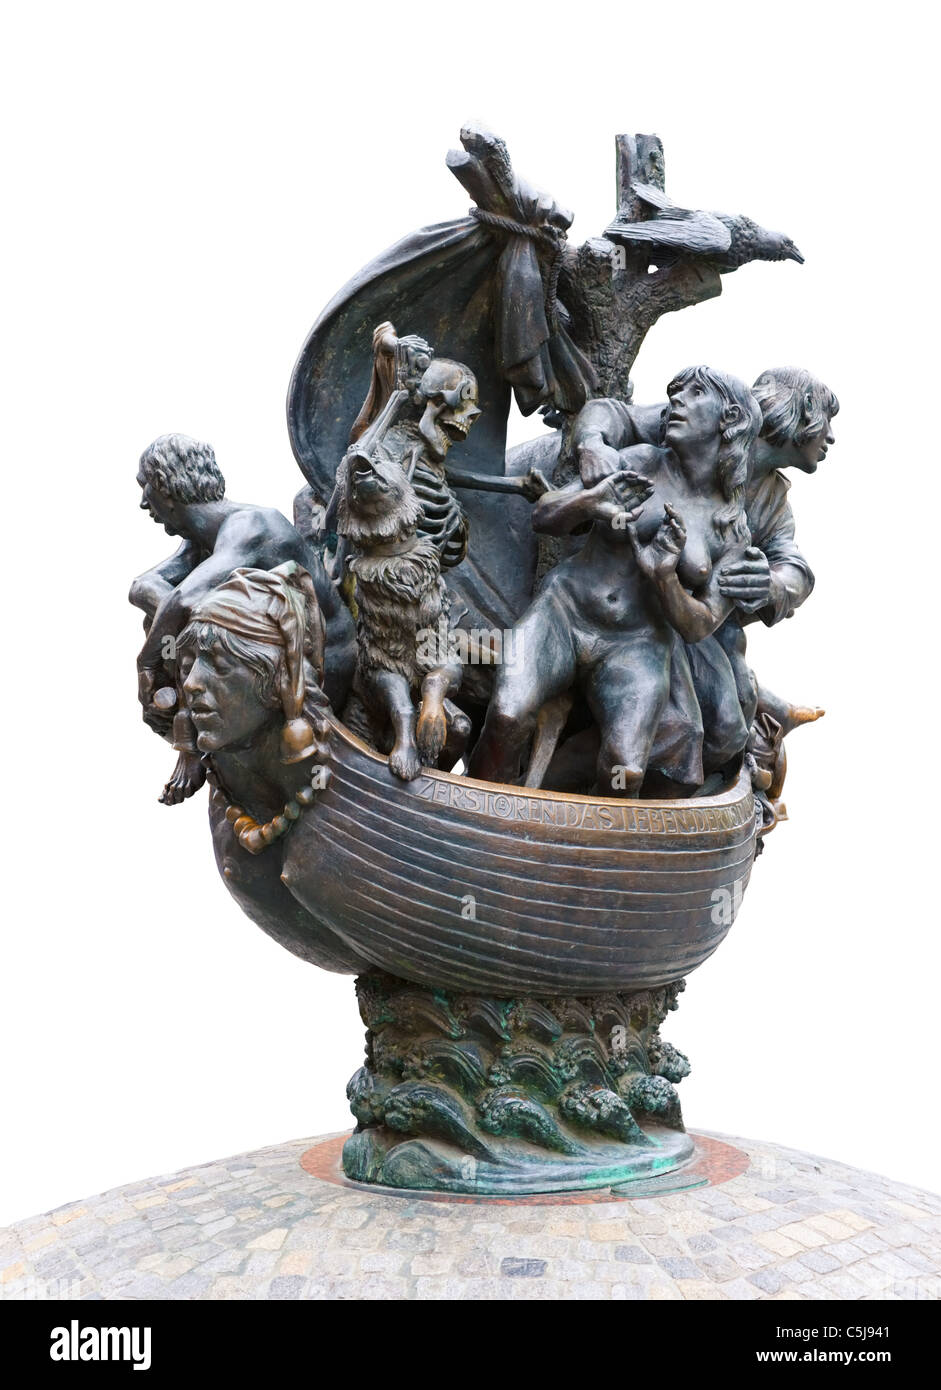 Fountain Sculpture 'Narrenschiff', 'The Ship of fools' by Juergen Weber, Konig Street, Nuremberg, Bavaria, Germany, Europe Stock Photo